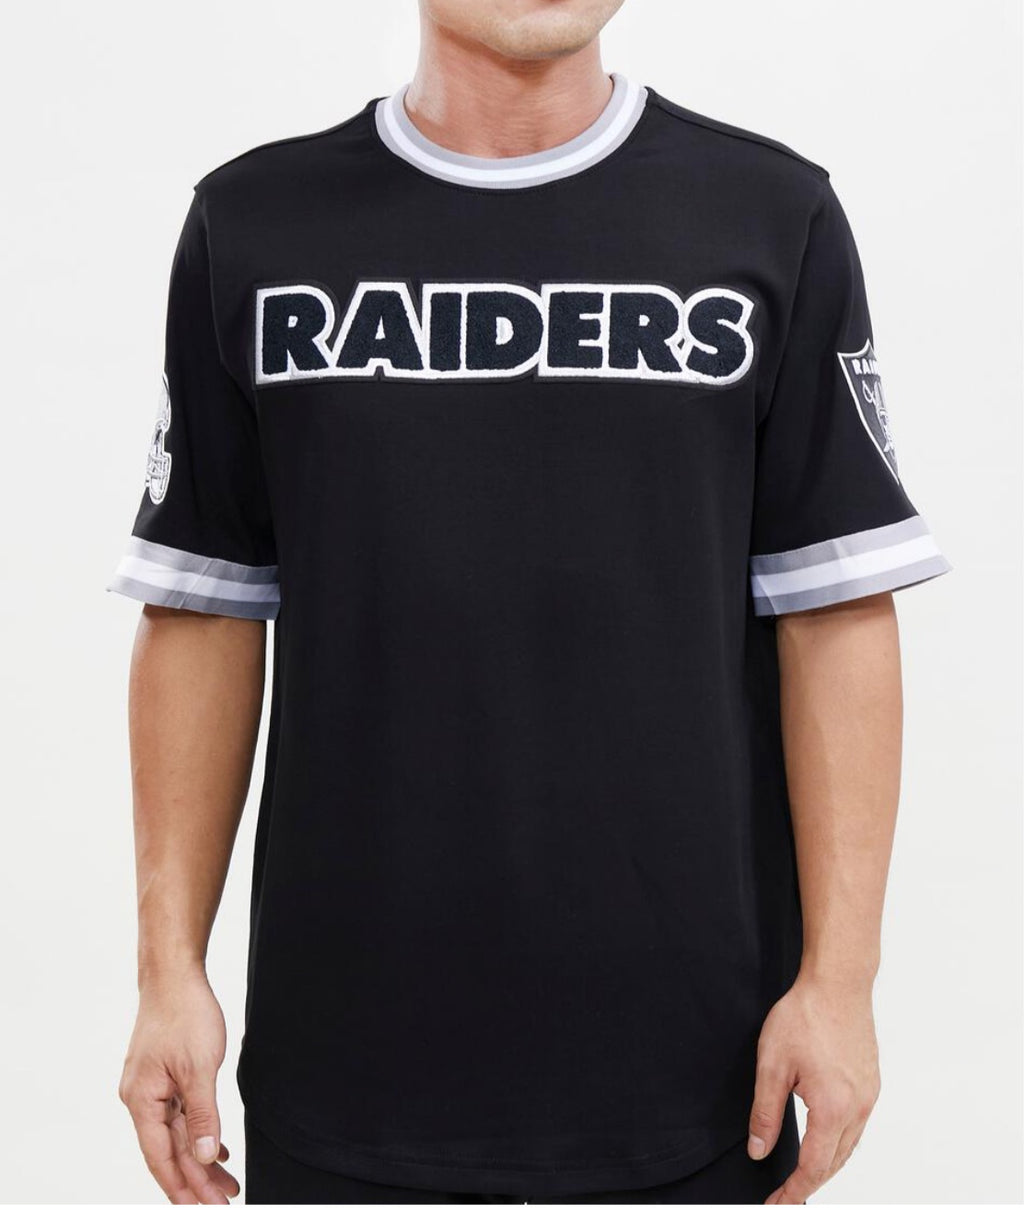 Pro Standard Men’s Las Vegas Raiders Jersey Tee Shirt